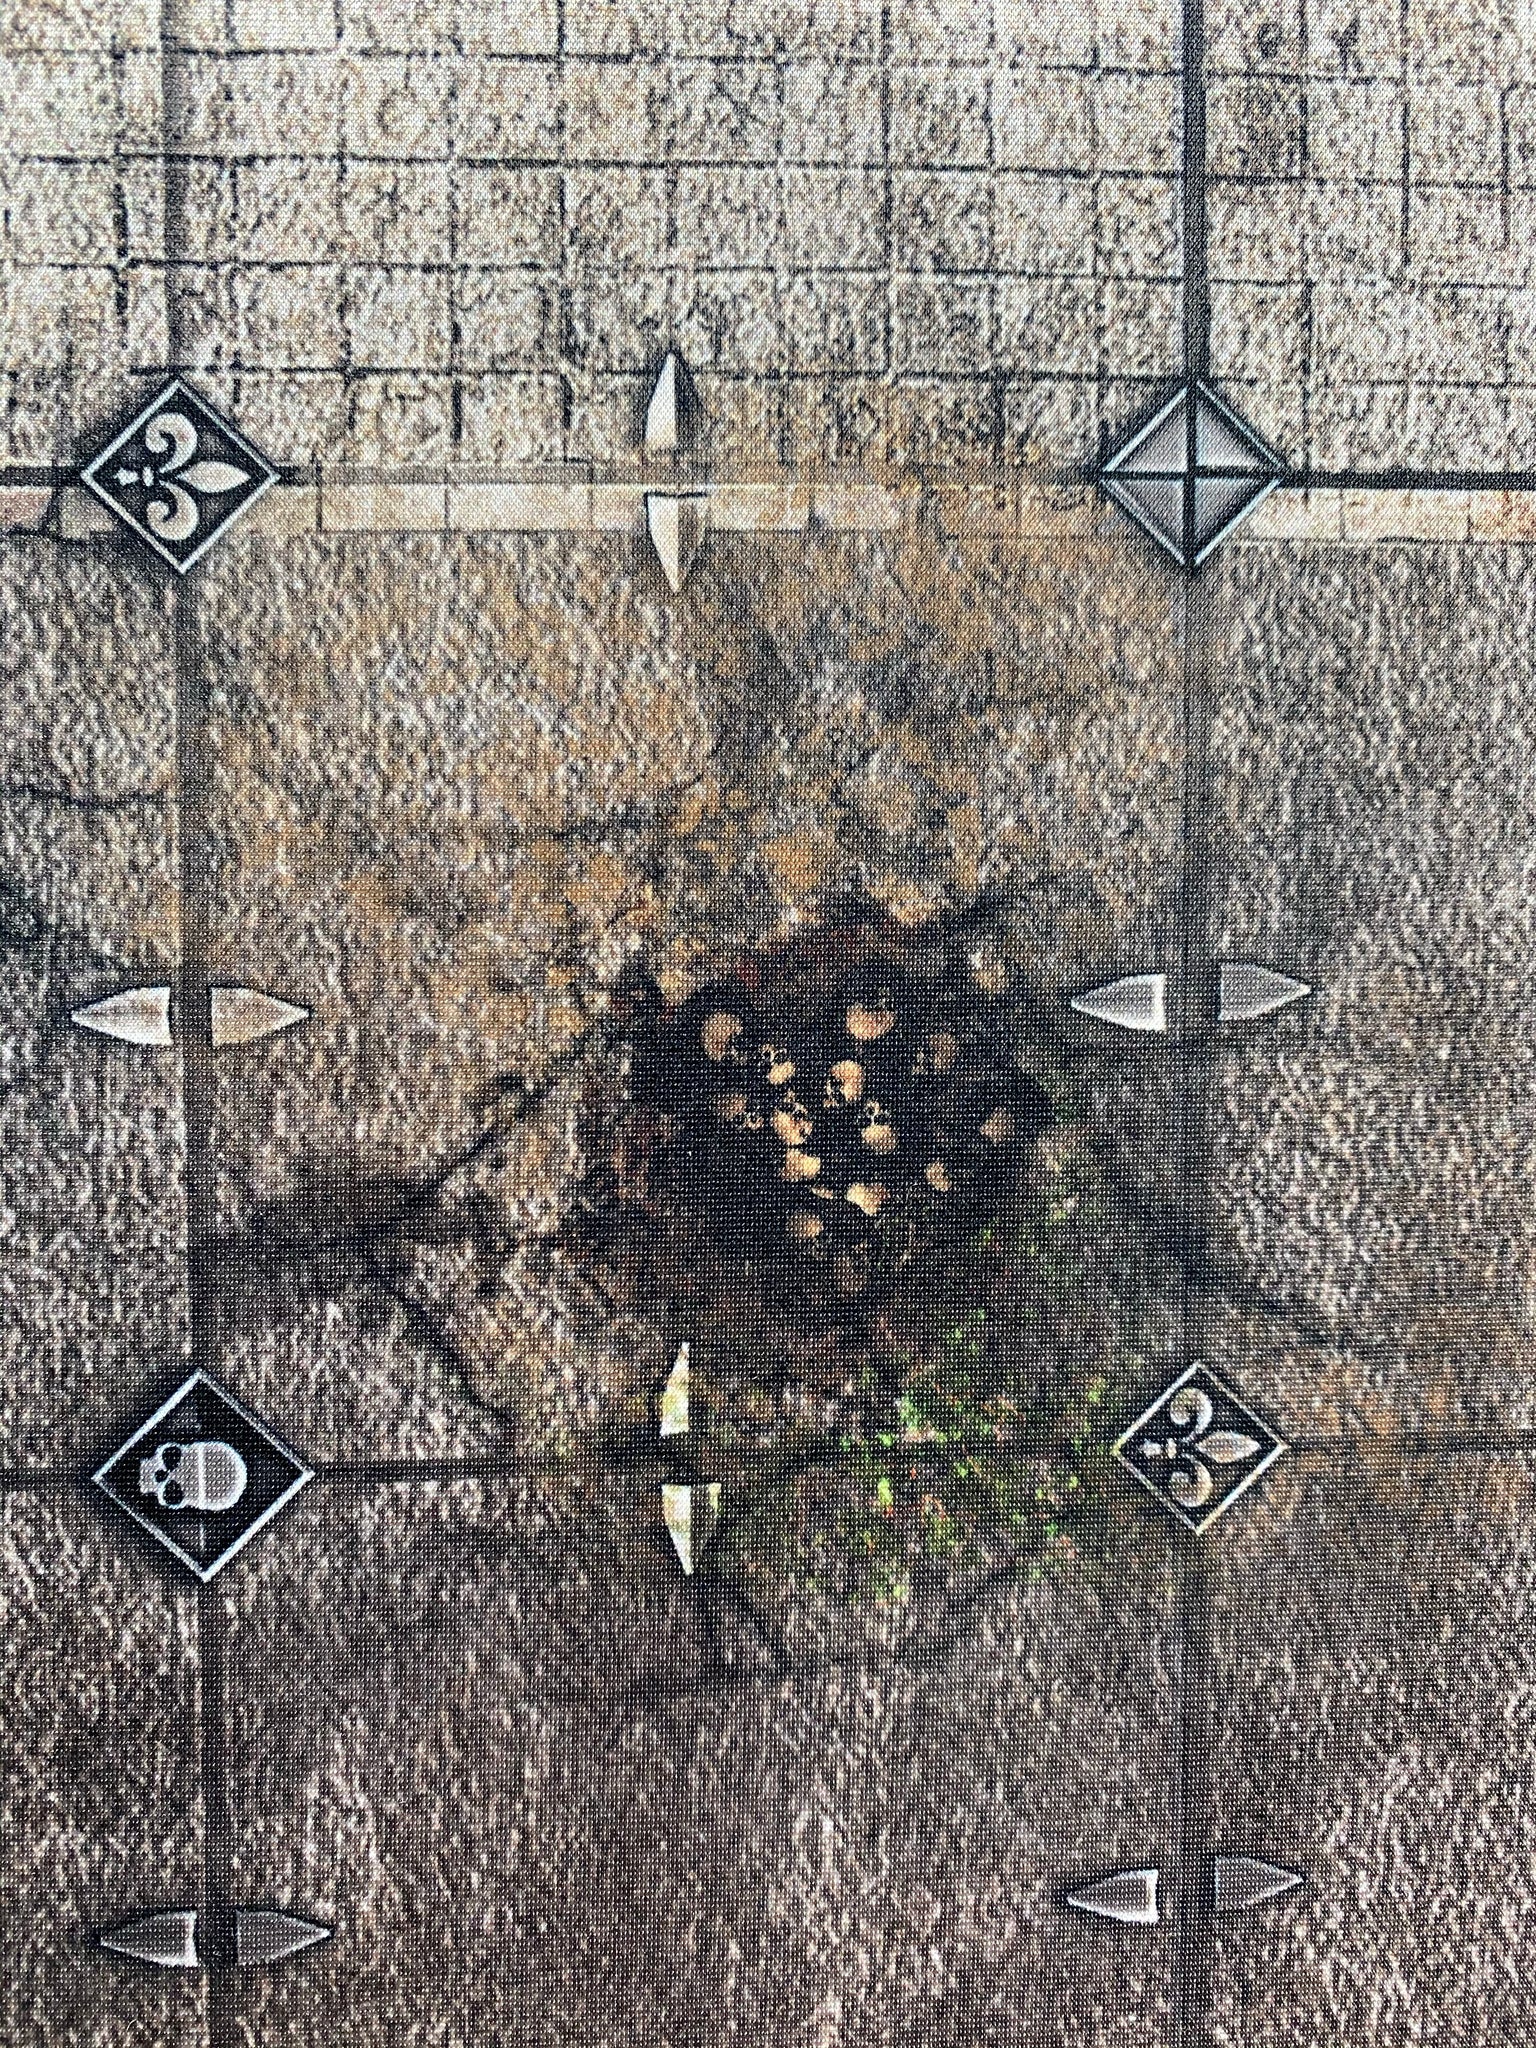 Curmbling Courtyard mat detail - buried skulls in the catacombs below, fleur de lis detailing